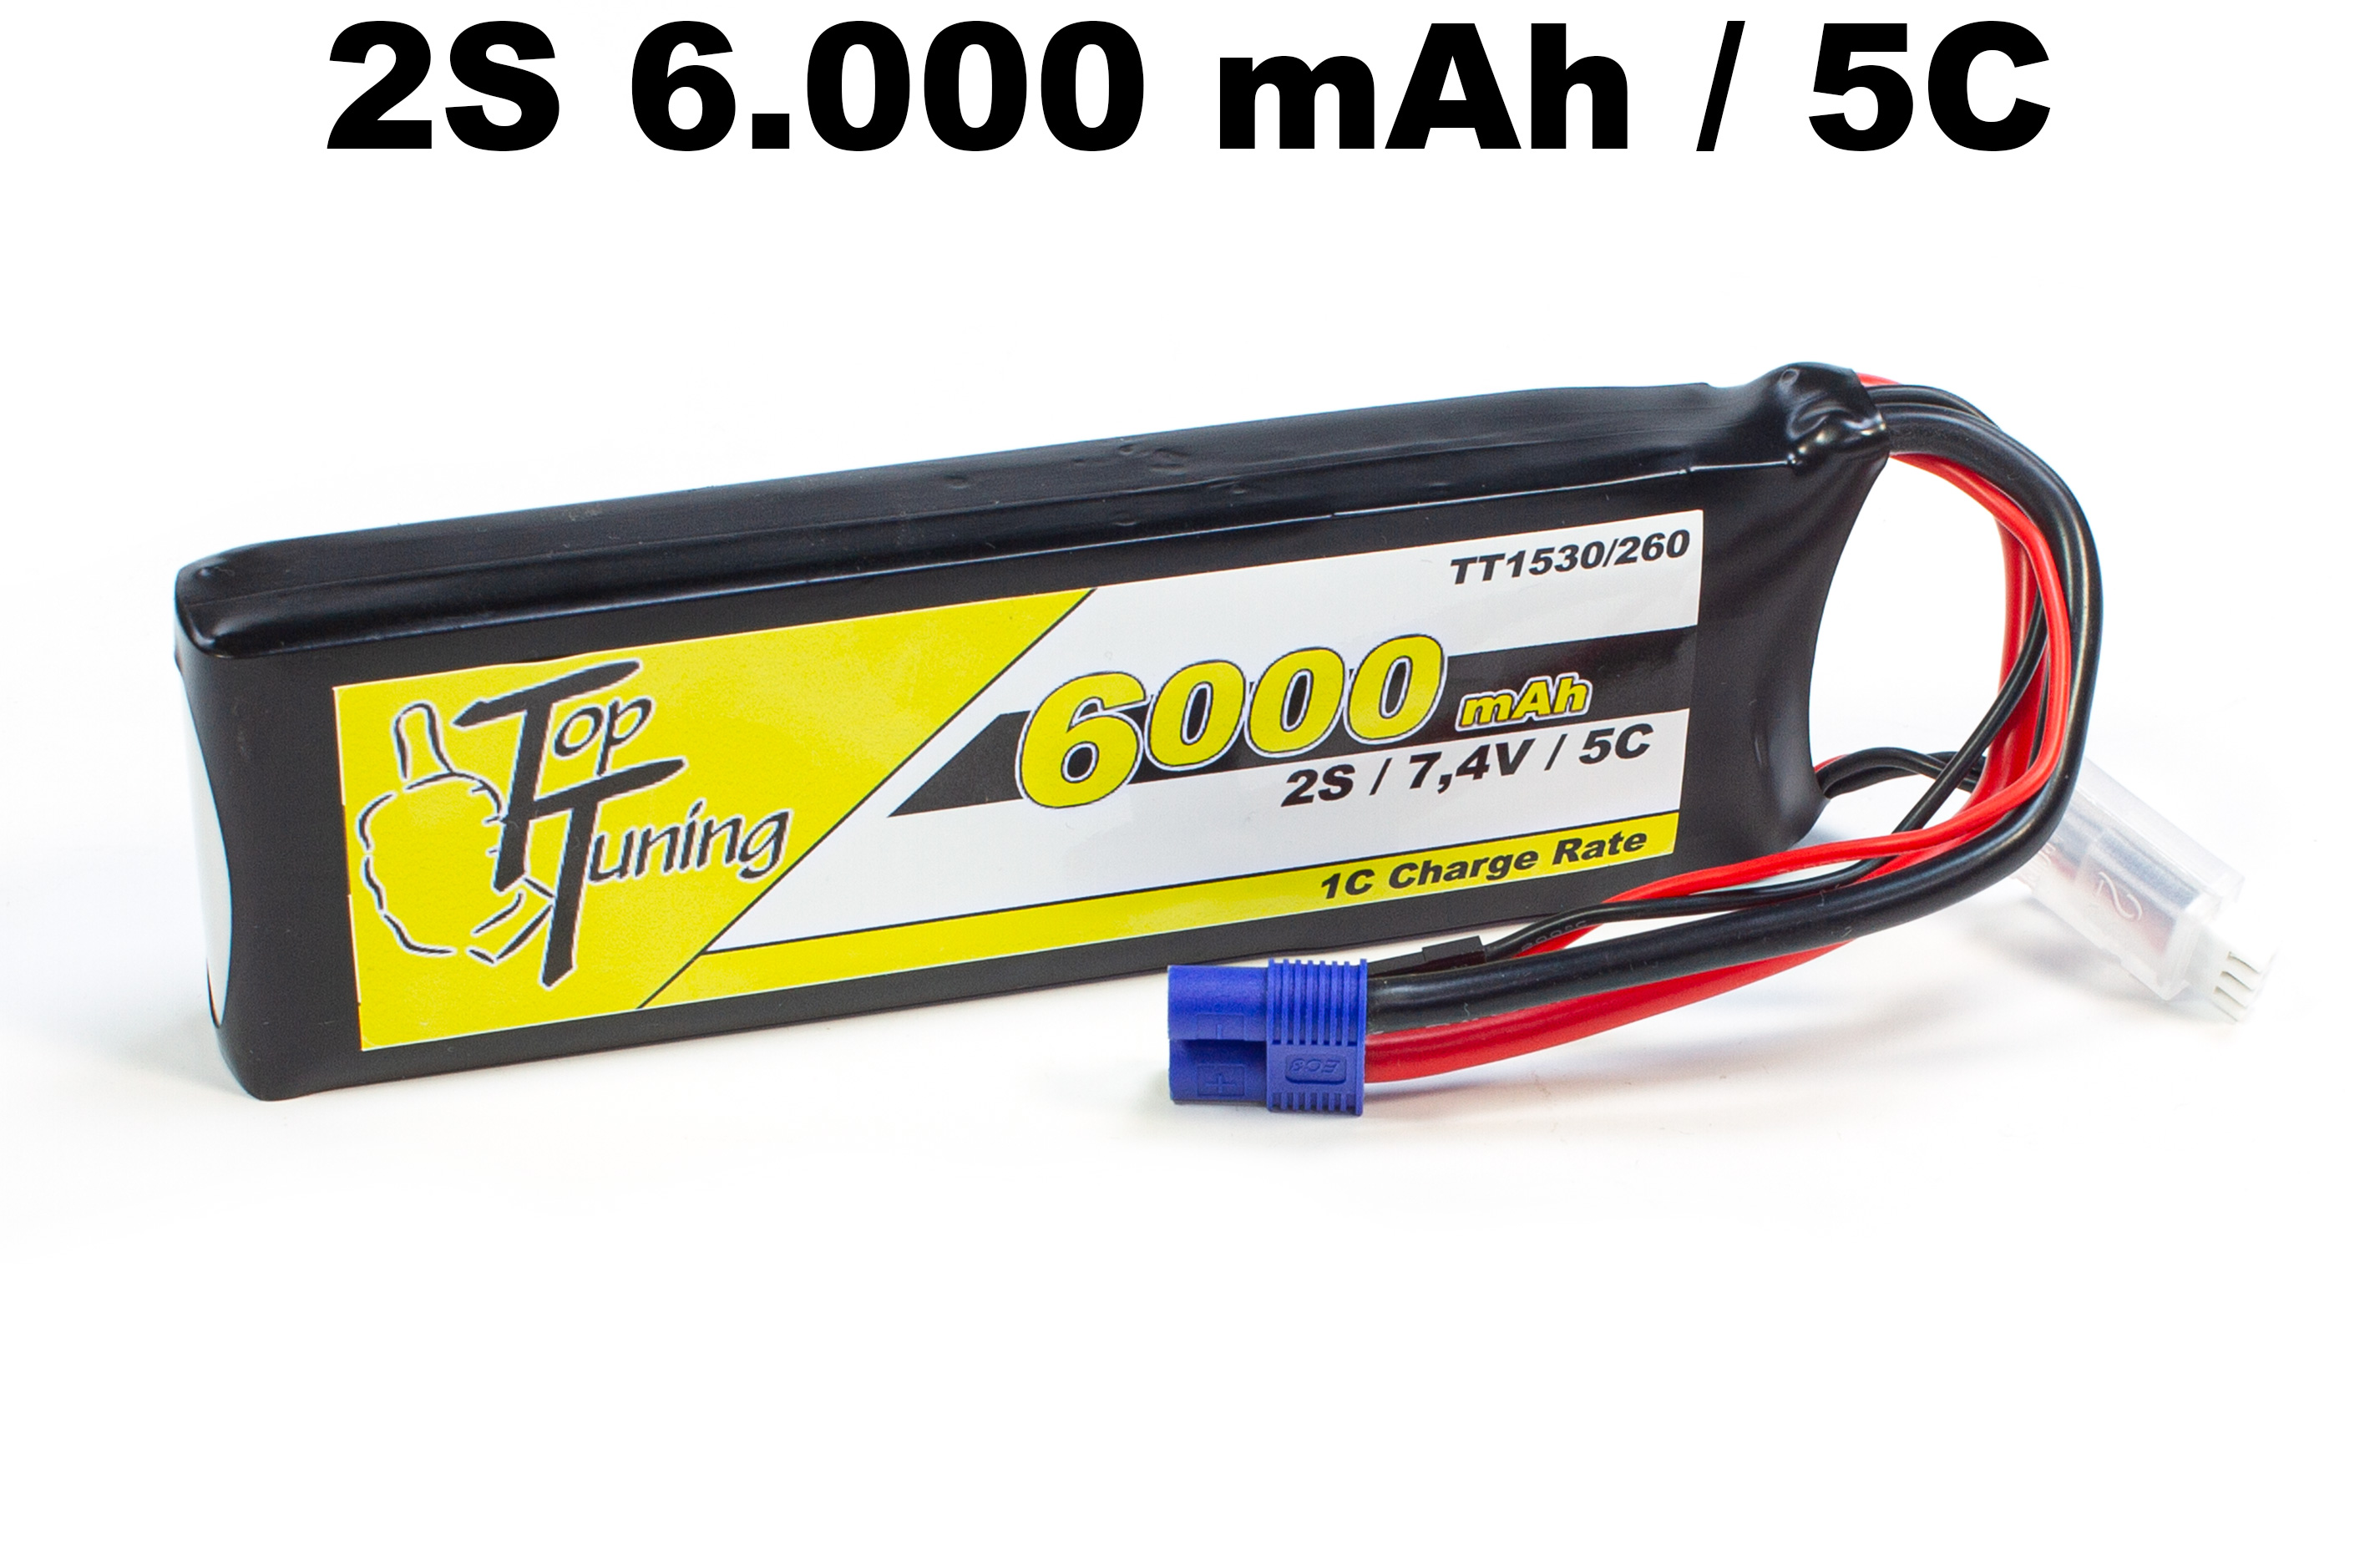 TT1530/260 Top Tuning 6000 mAh LiPo Empfängerakku 2S, 7,4V 5C